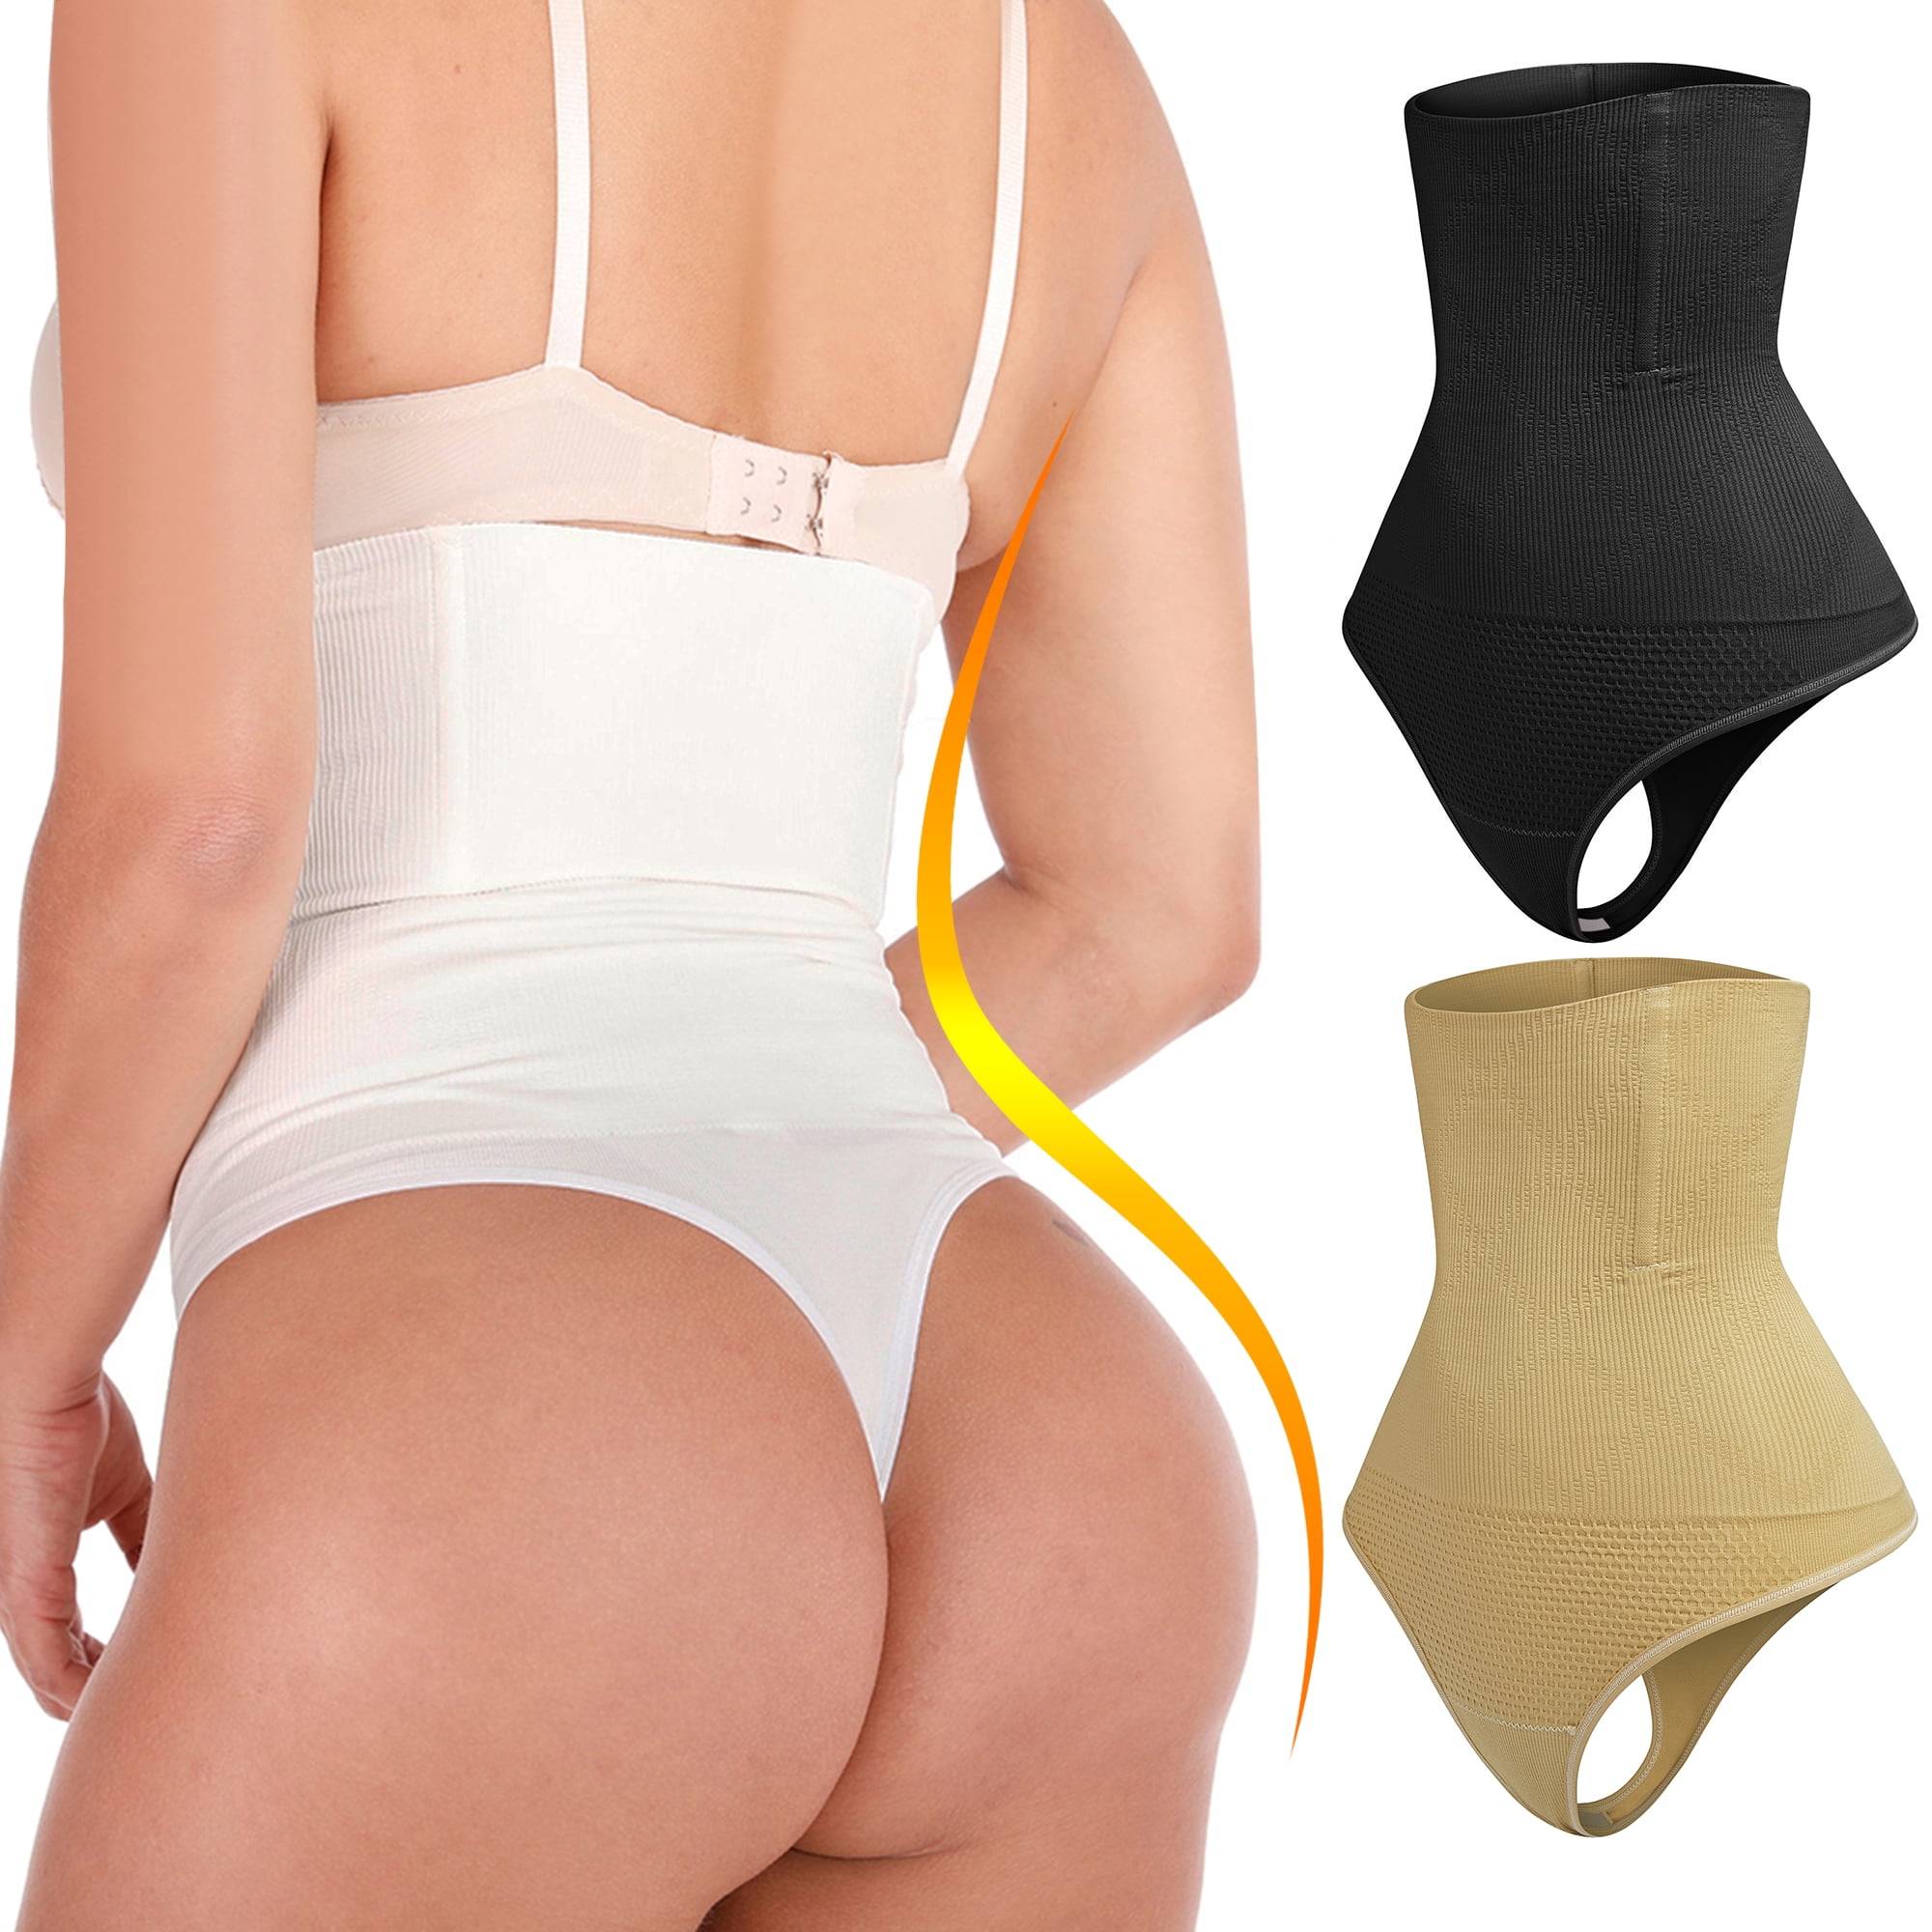 3pieces/lot High Waist Women Seamless Control Panties Slimming Body Shaper  Underwear Girdle Shapewear Ladies Briefs Panty